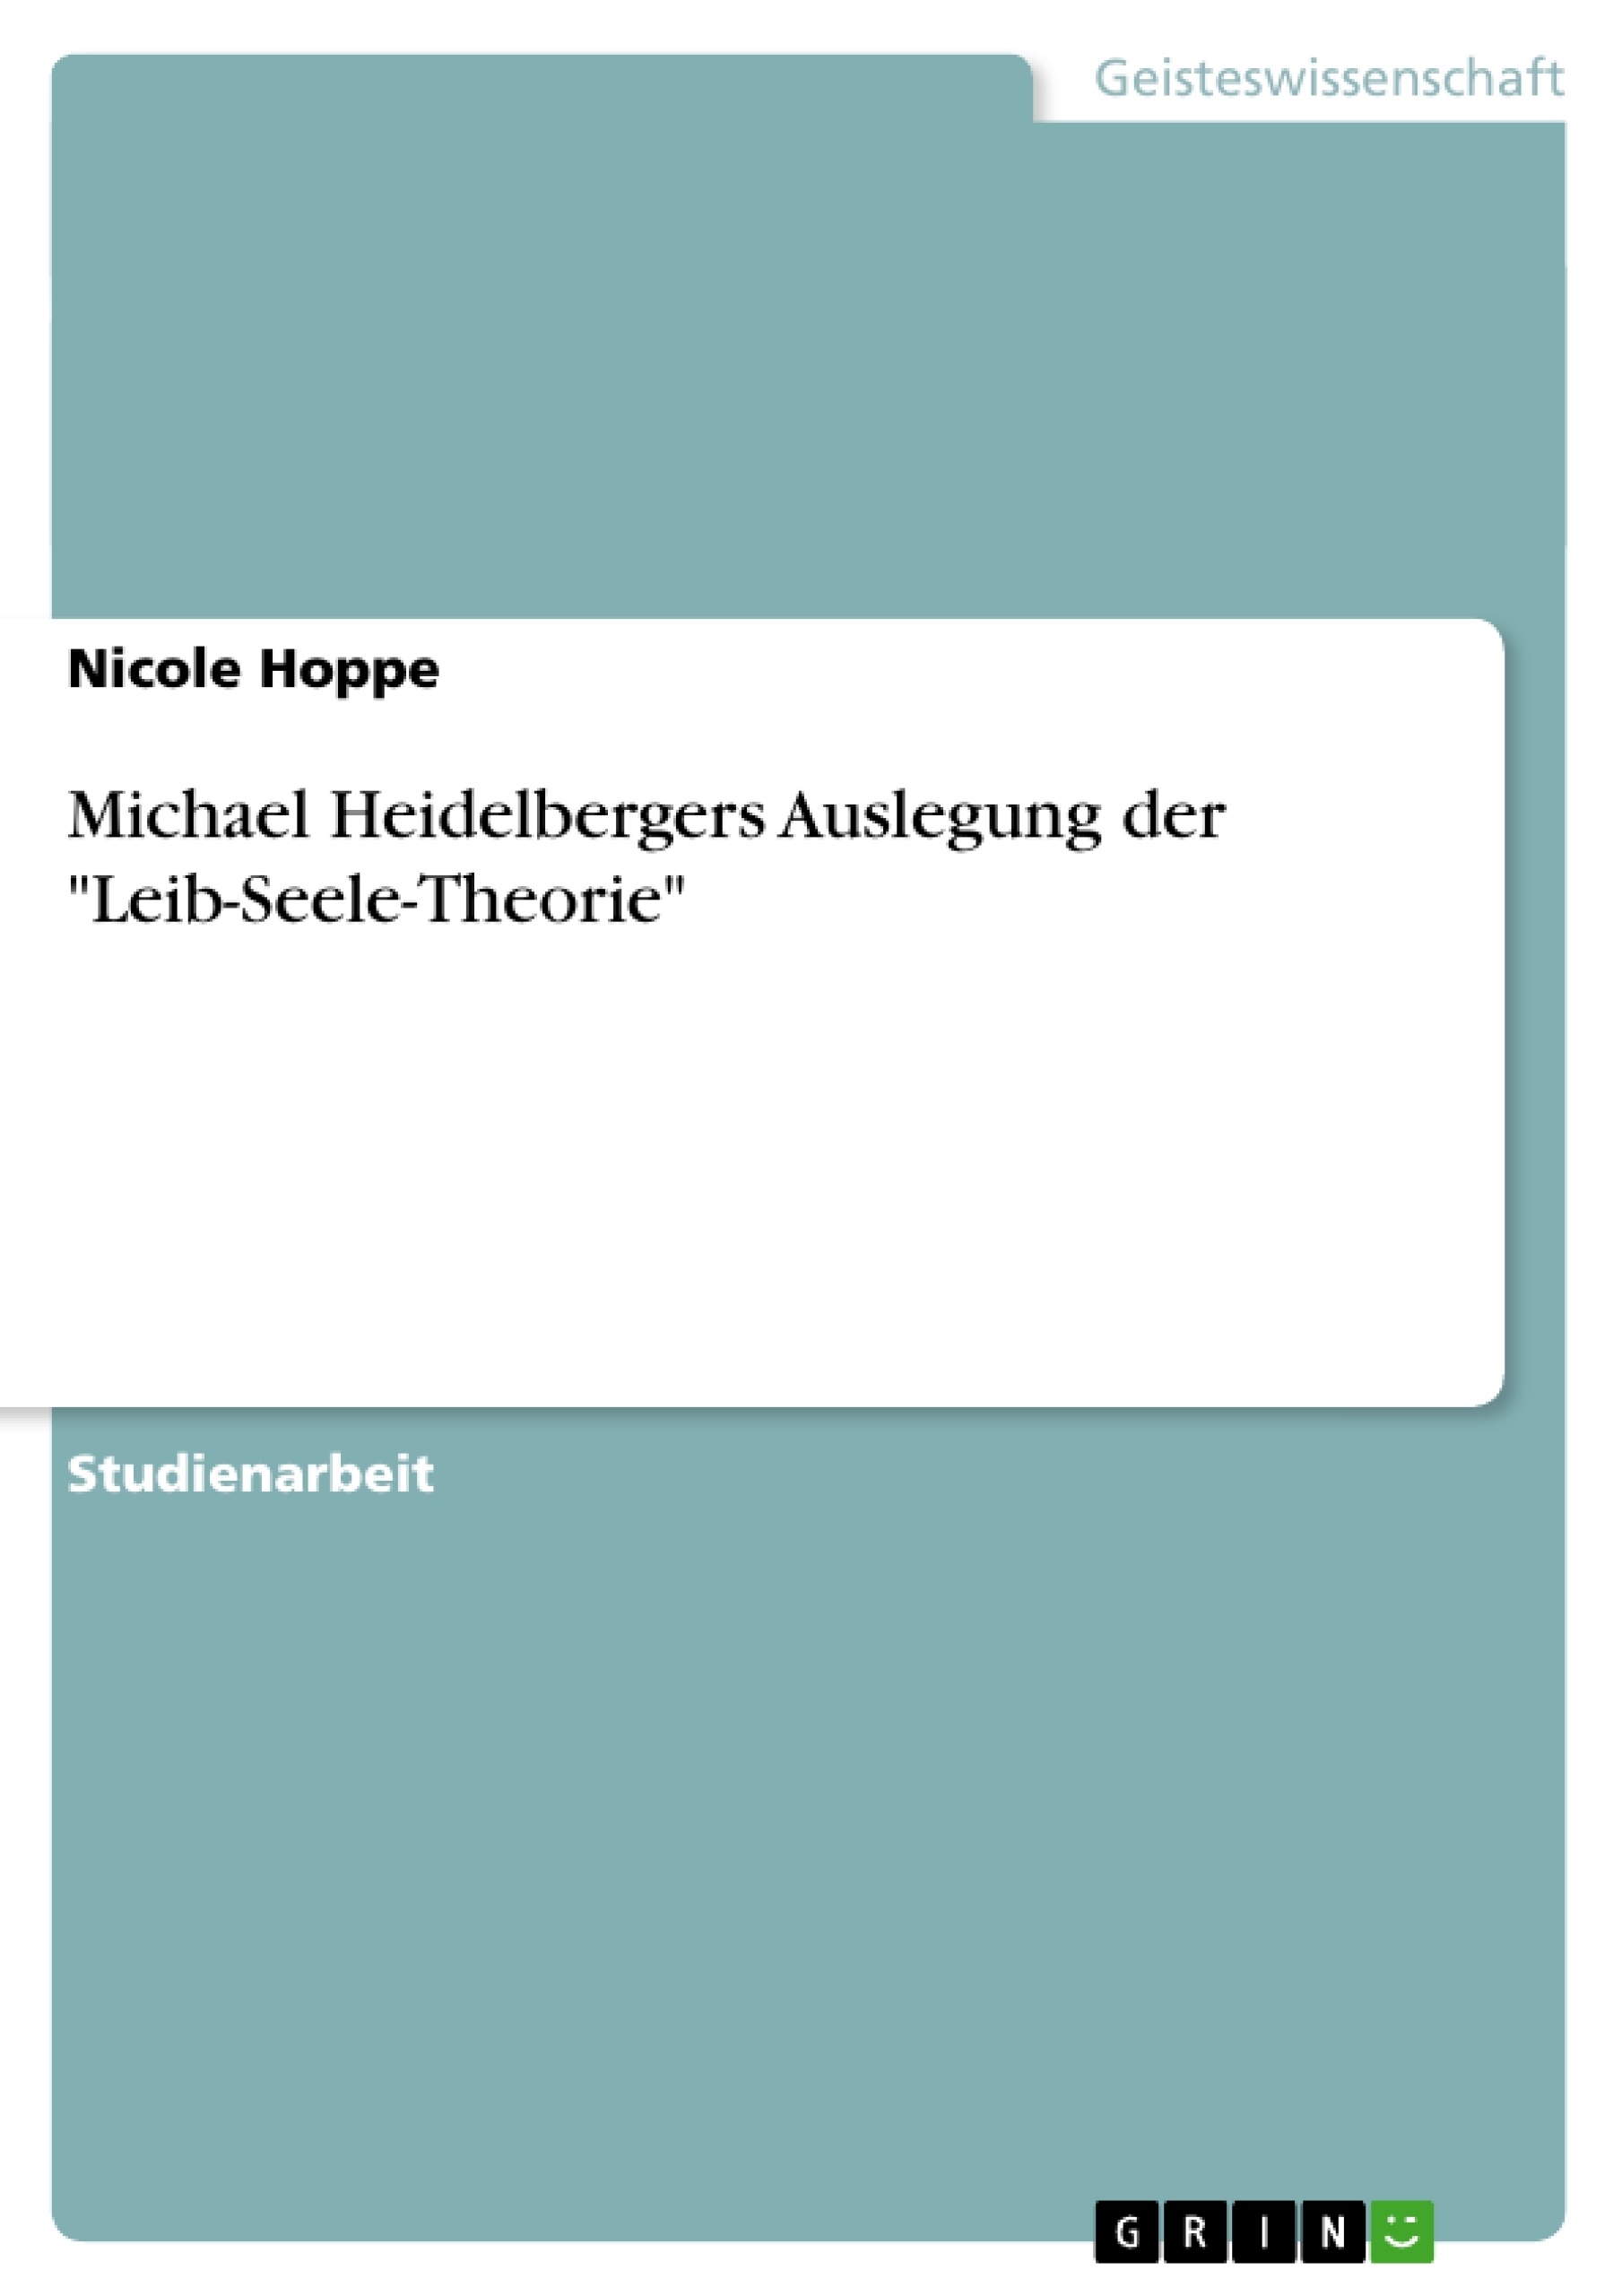 Título: Michael Heidelbergers Auslegung der "Leib-Seele-Theorie"